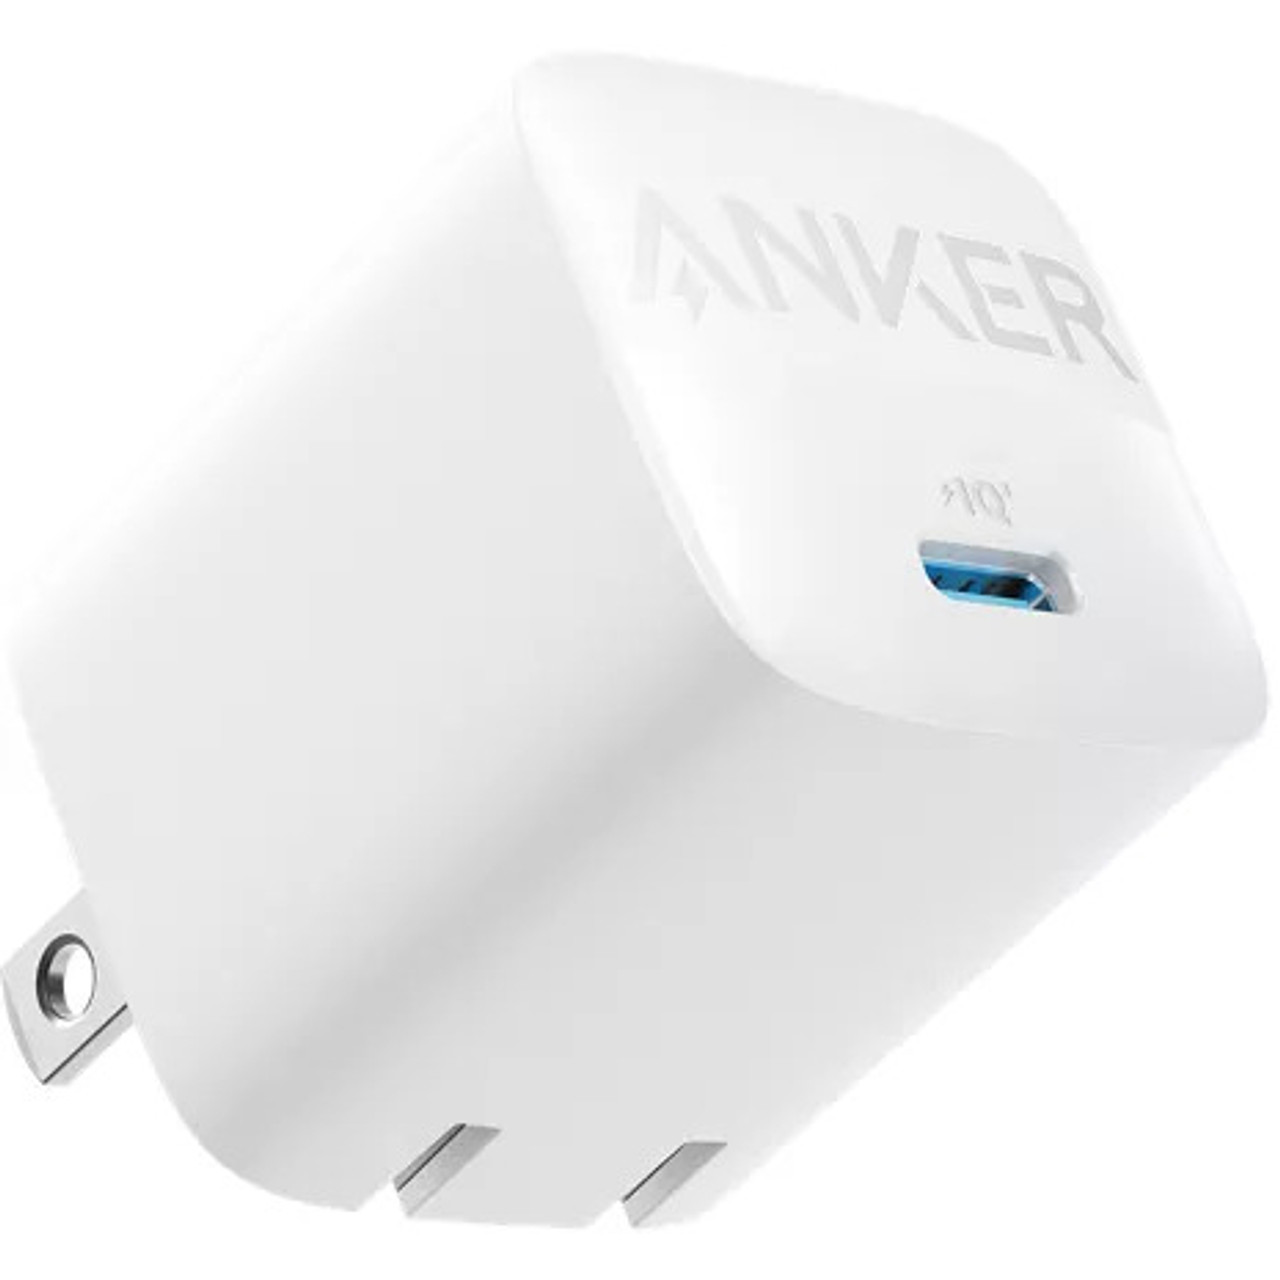 ANKER NANO II 30W USB-C WALL CHARGER - WHITE | A2639J21-1 | AYOUB COMPUTERS  | LEBANON